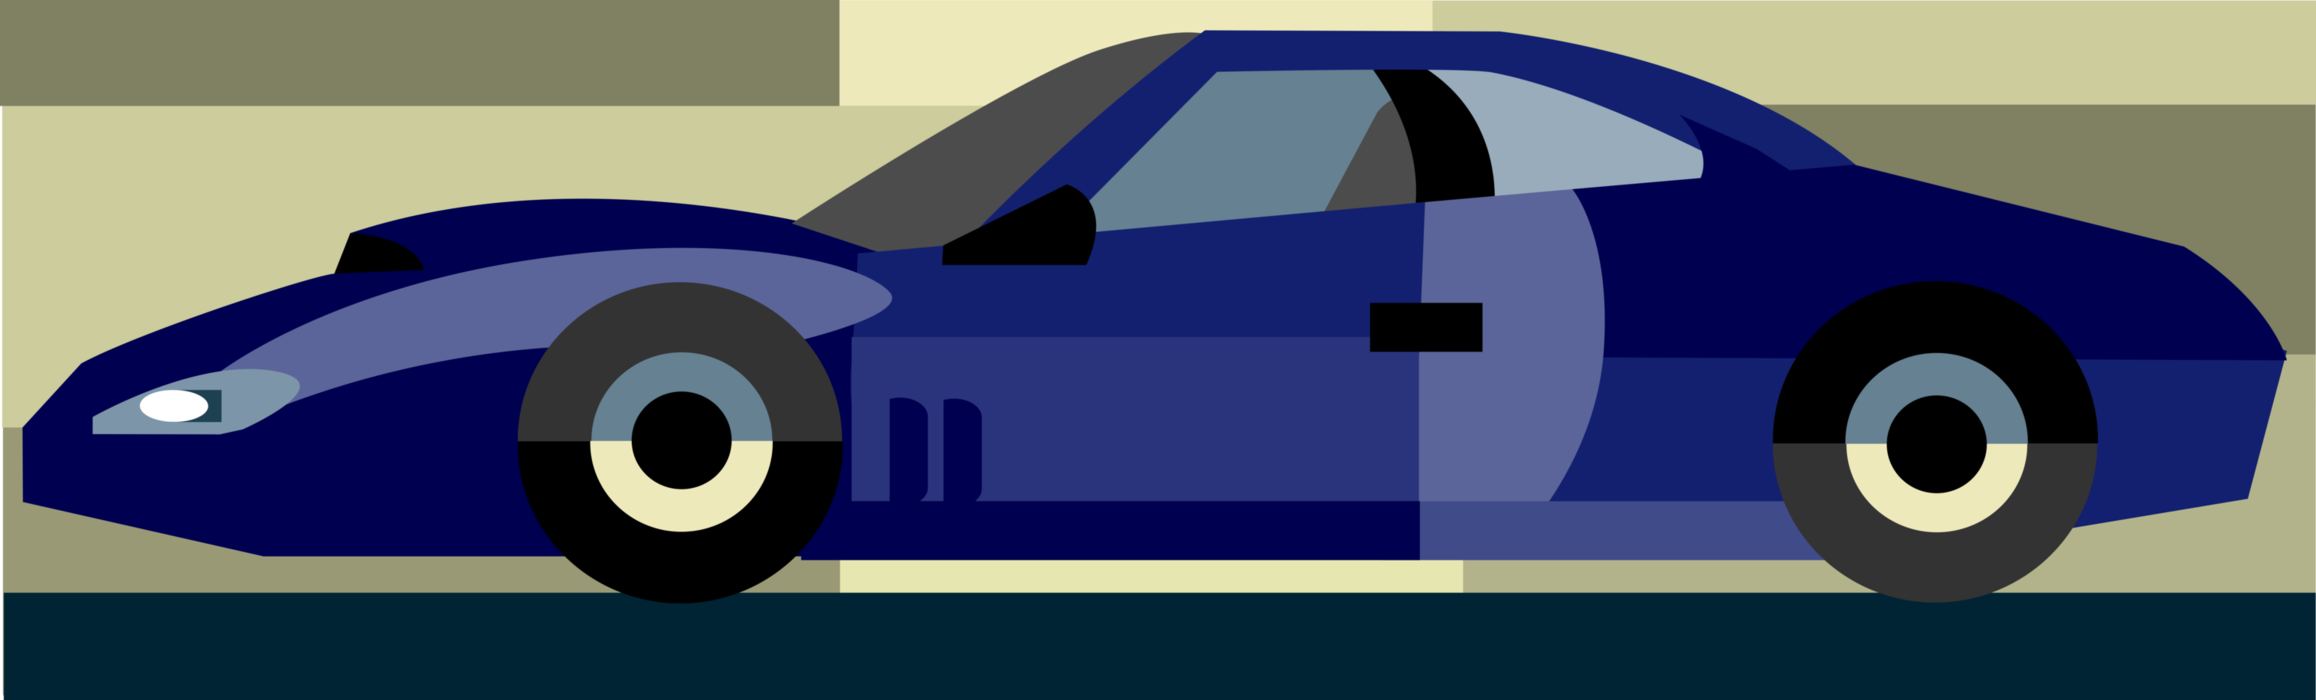 Vector Illustration of Luxury Sports Car Automobile Motor Vehicle